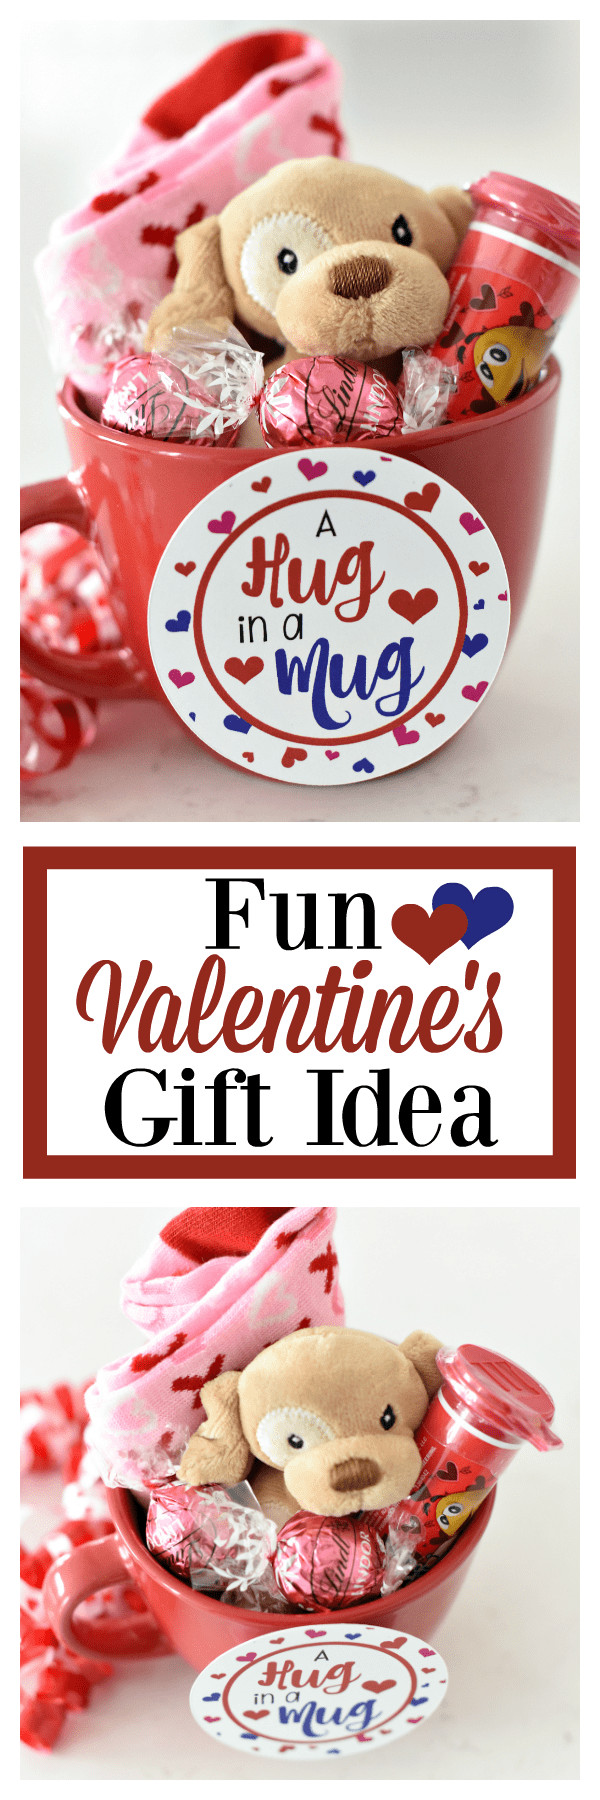 Free Valentine Gift Ideas
 Fun Valentines Gift Idea for Kids – Fun Squared